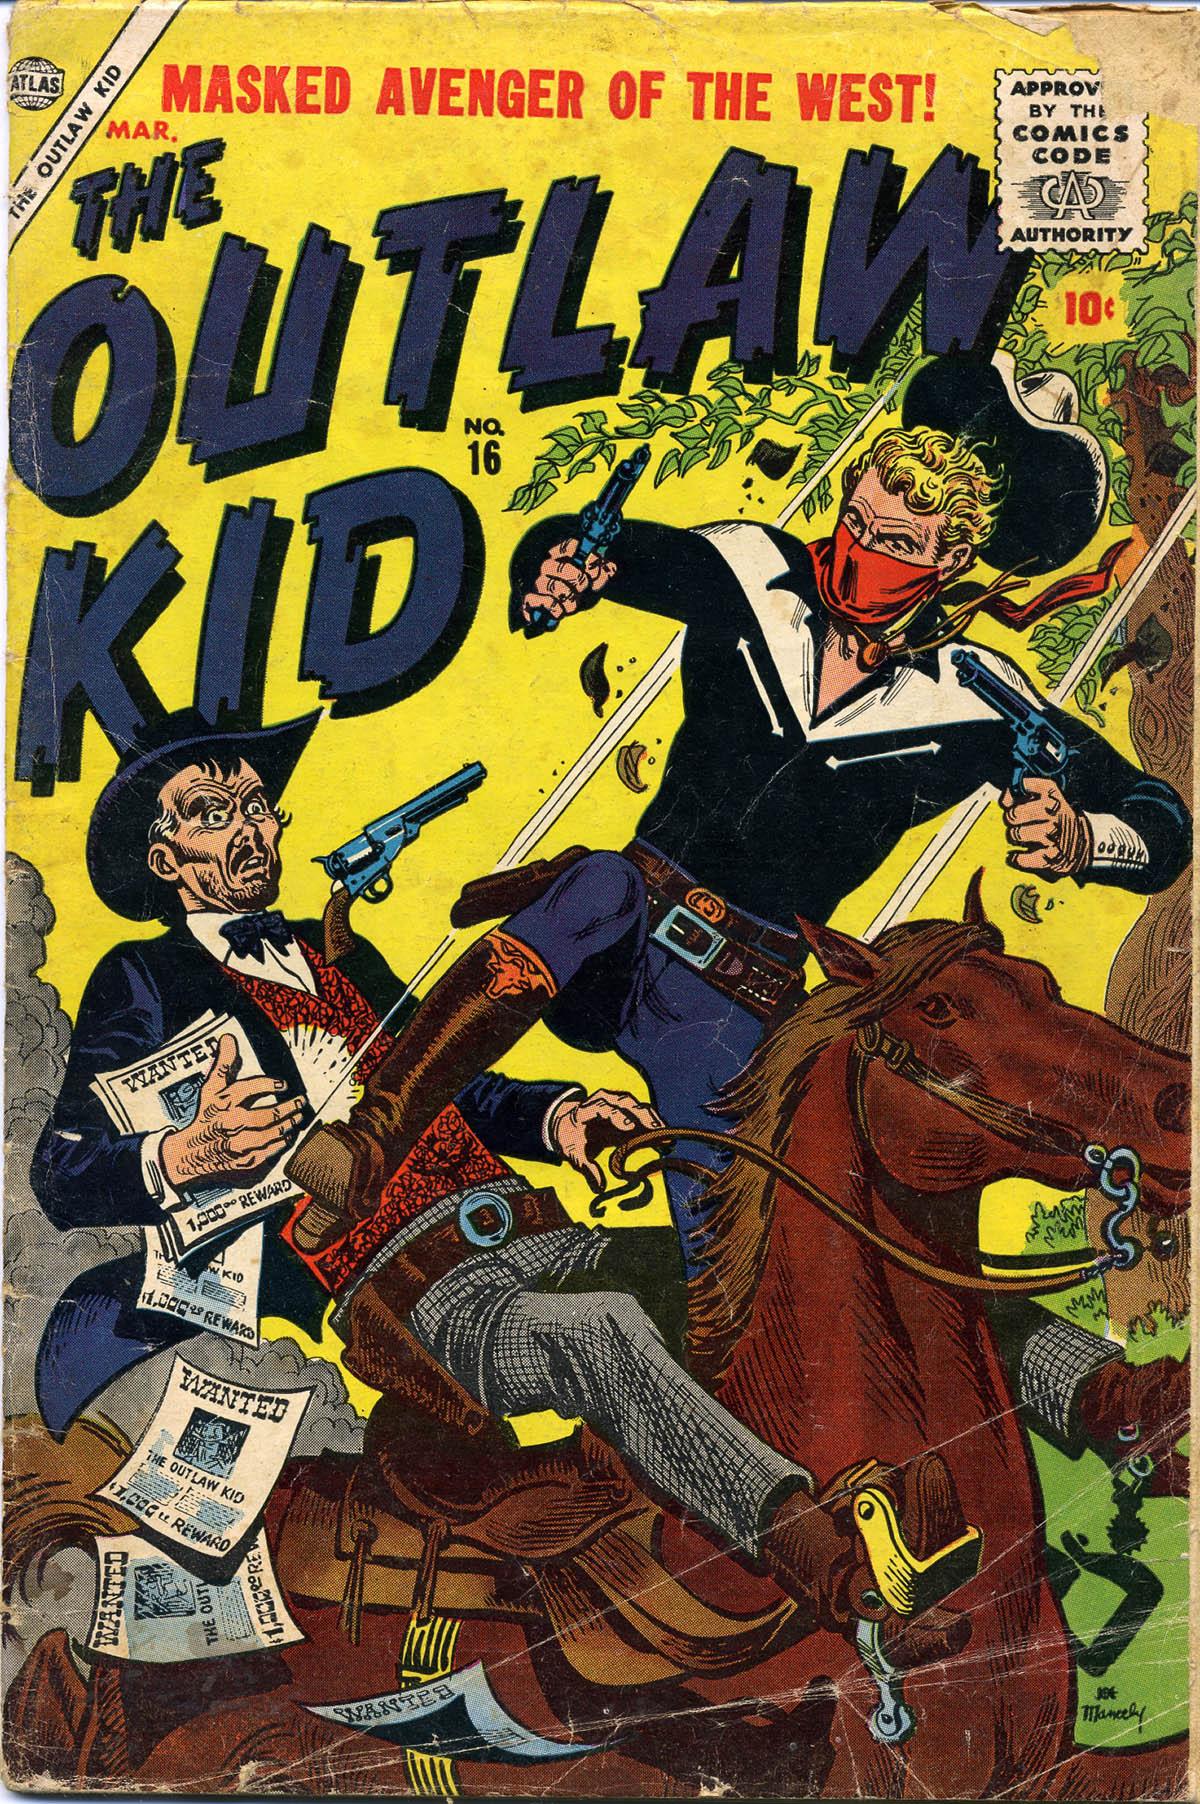 Outlaw Kid Vol. 1 #16